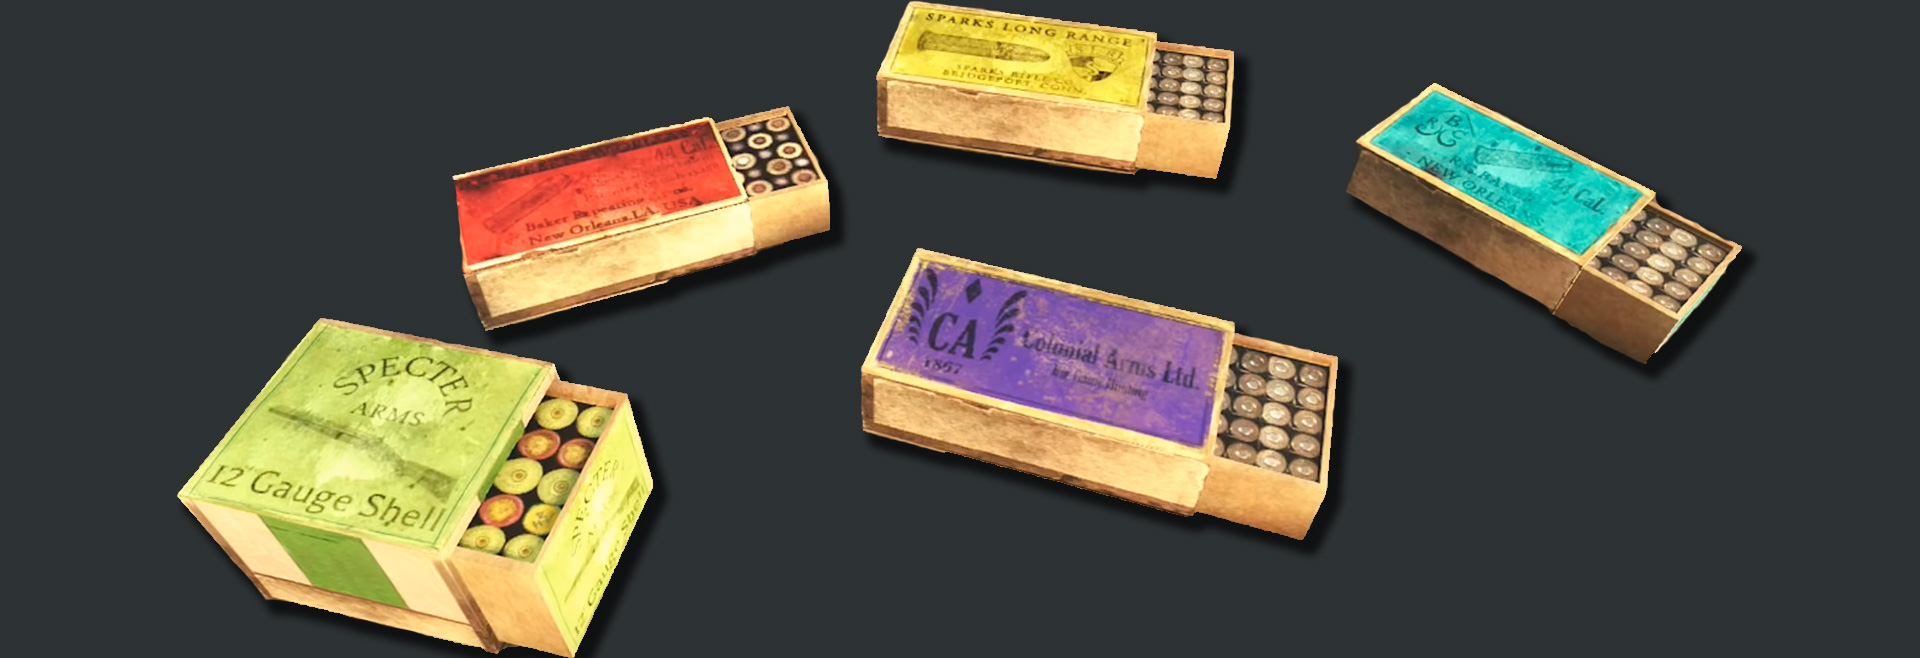 custom ammo boxes